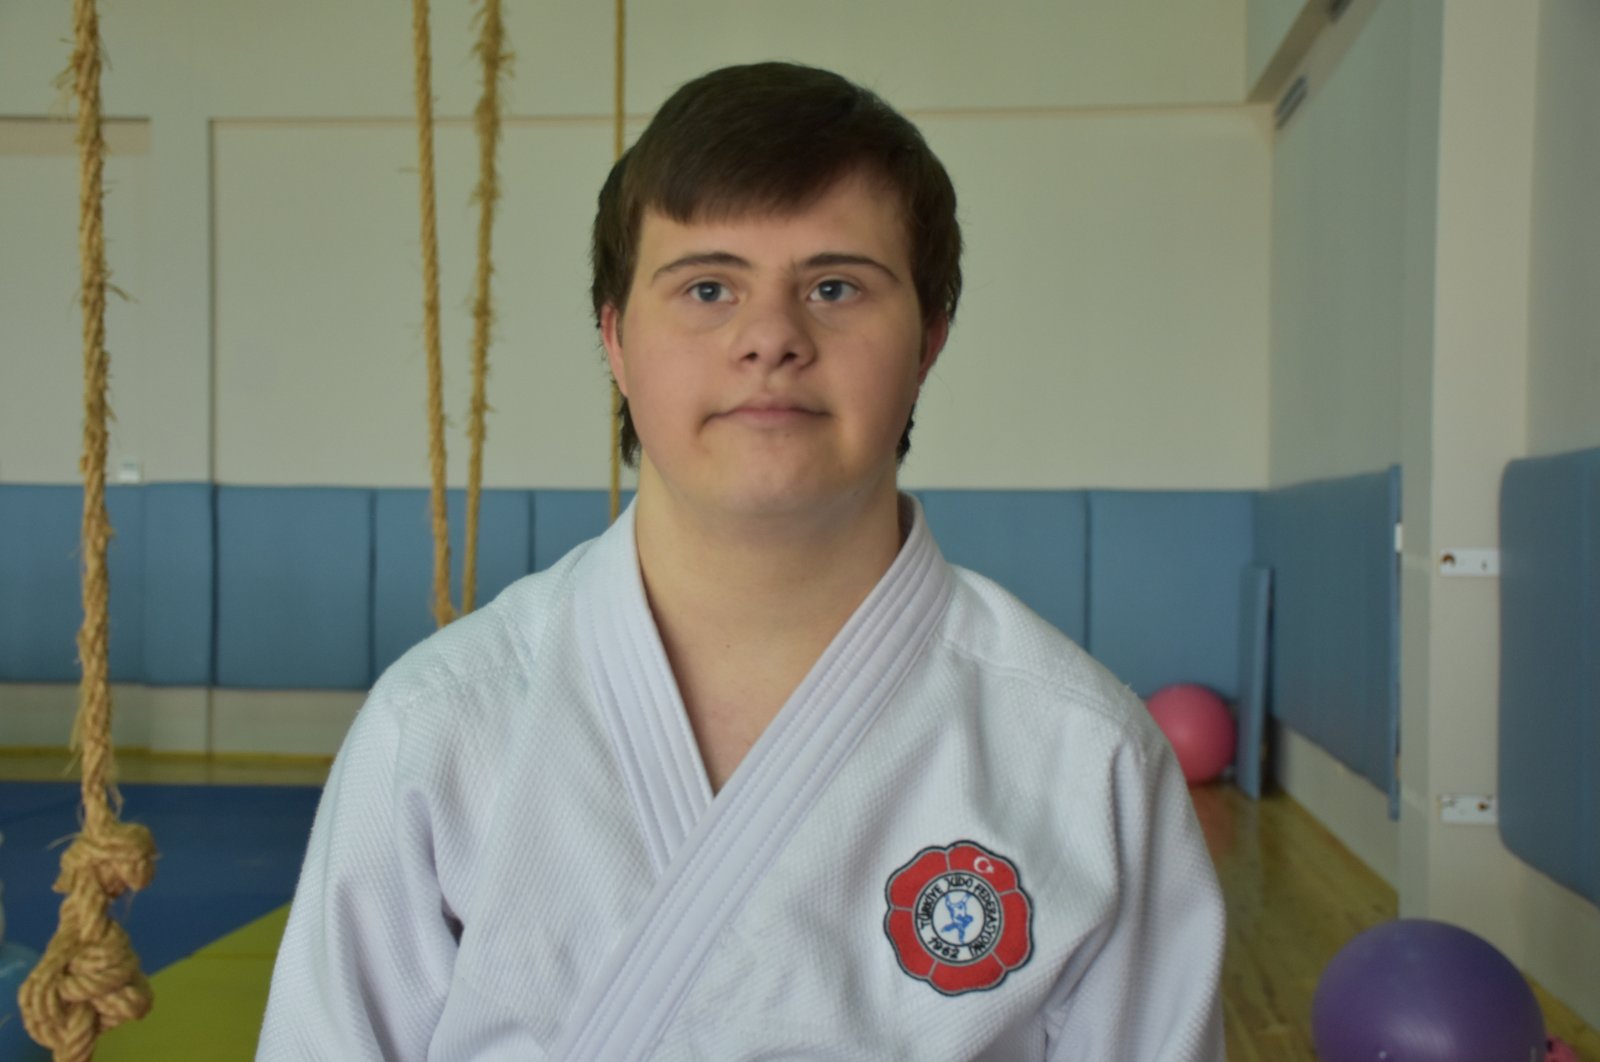 Melawan segala rintangan: Judoka dengan sindrom Down mencapai puncaknya